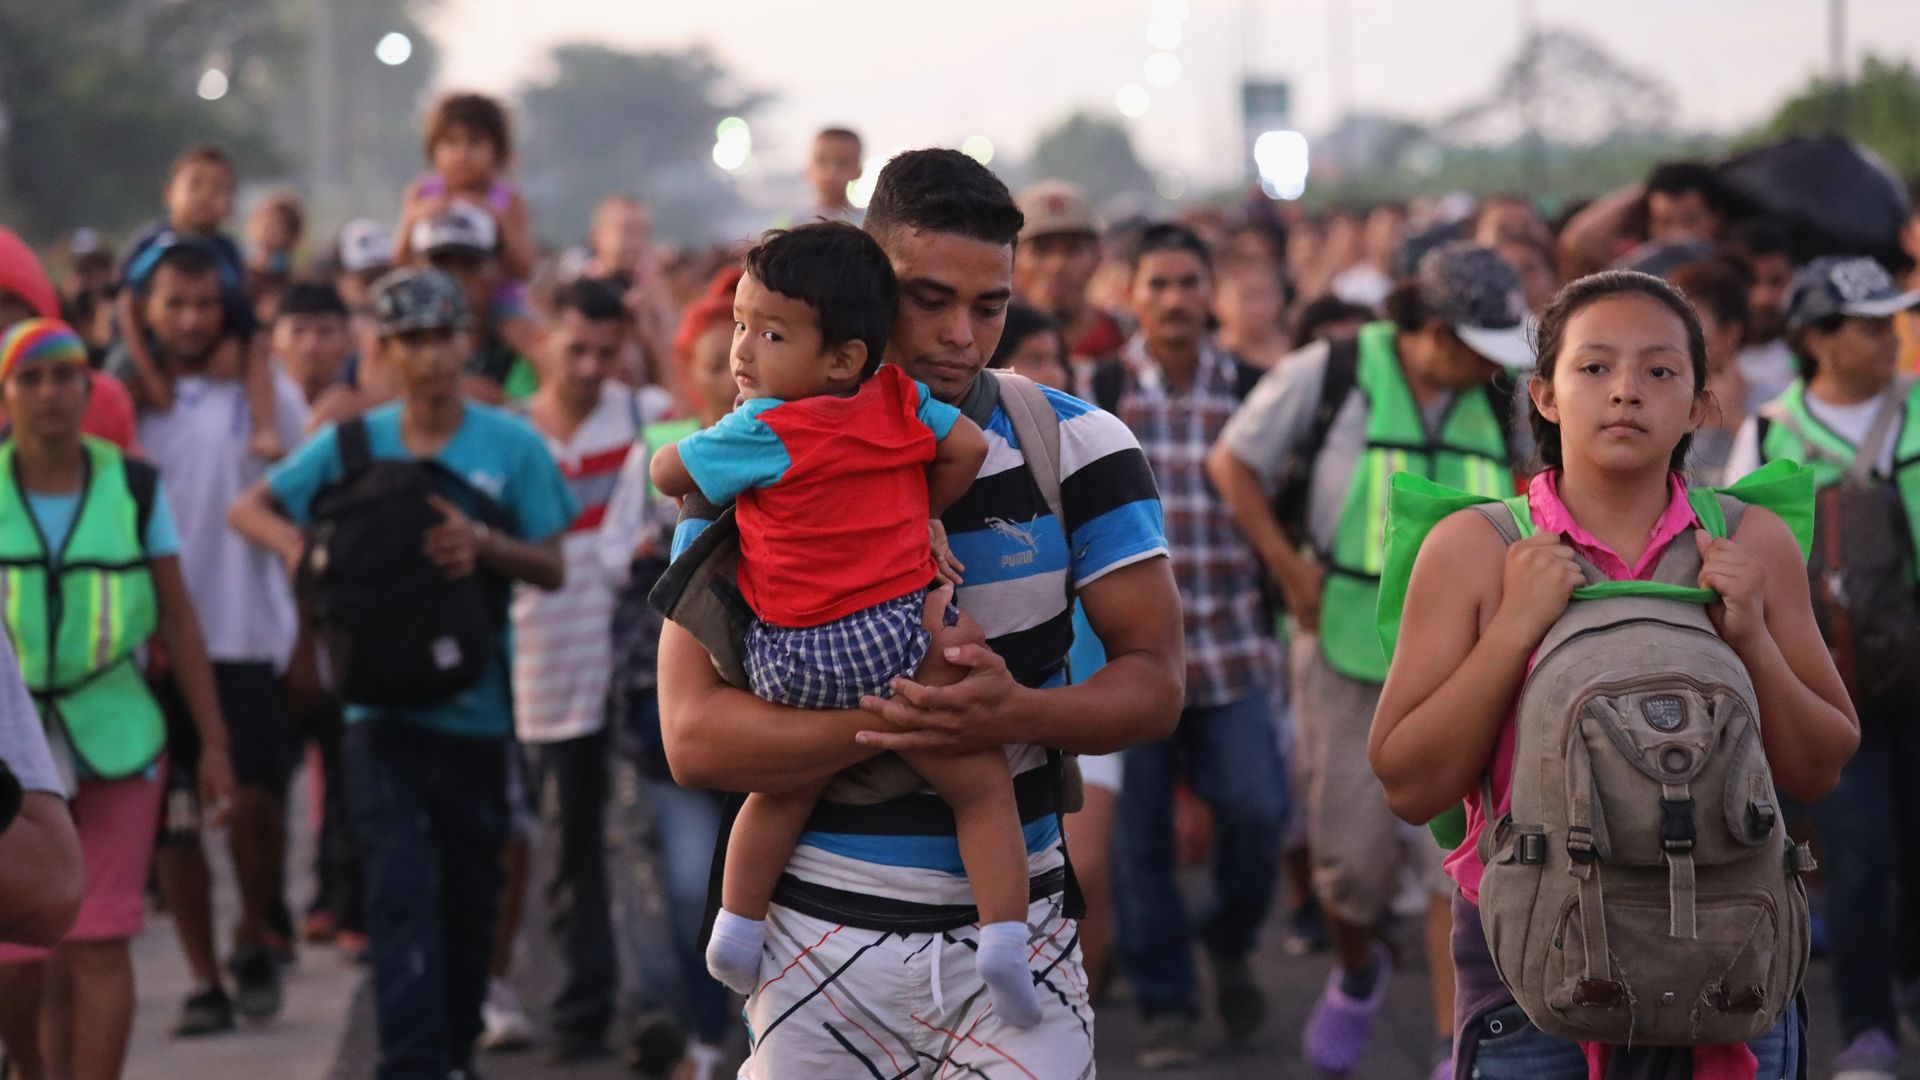 Man carrying young boy walks ahead of a caravan of people.